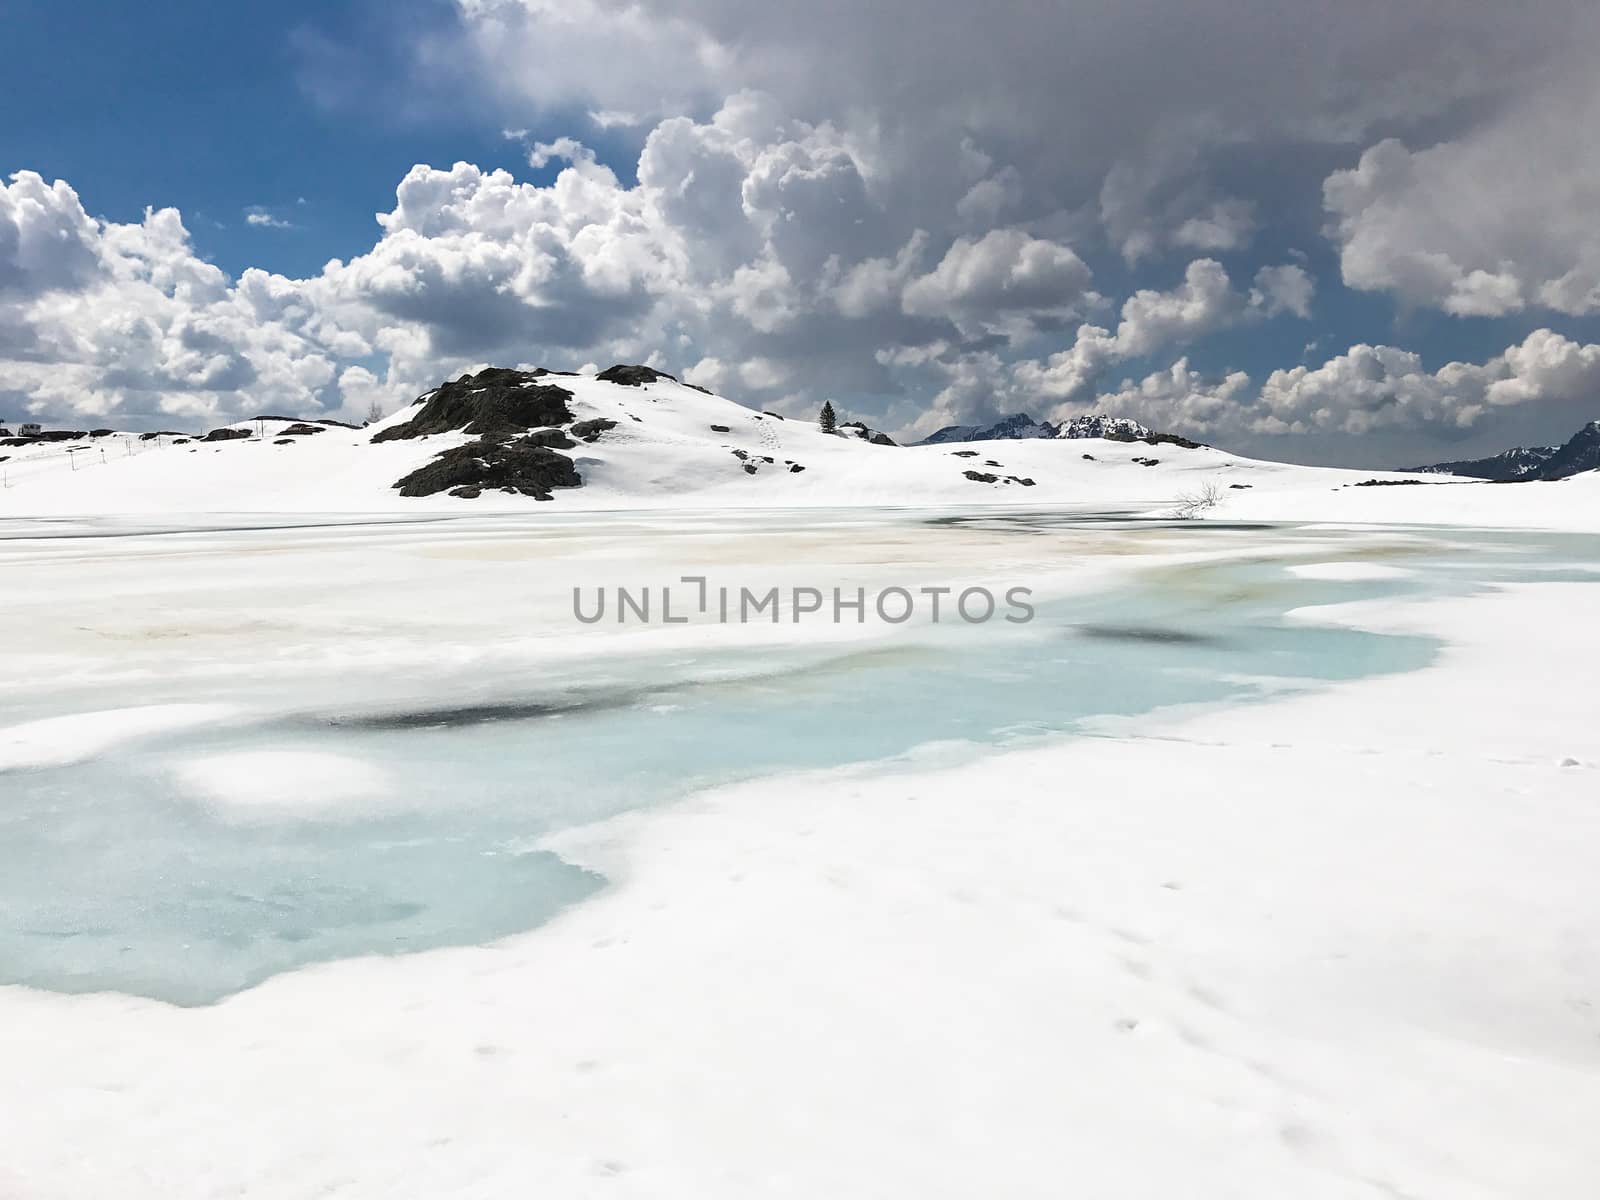 Alps in winter by Kartouchken